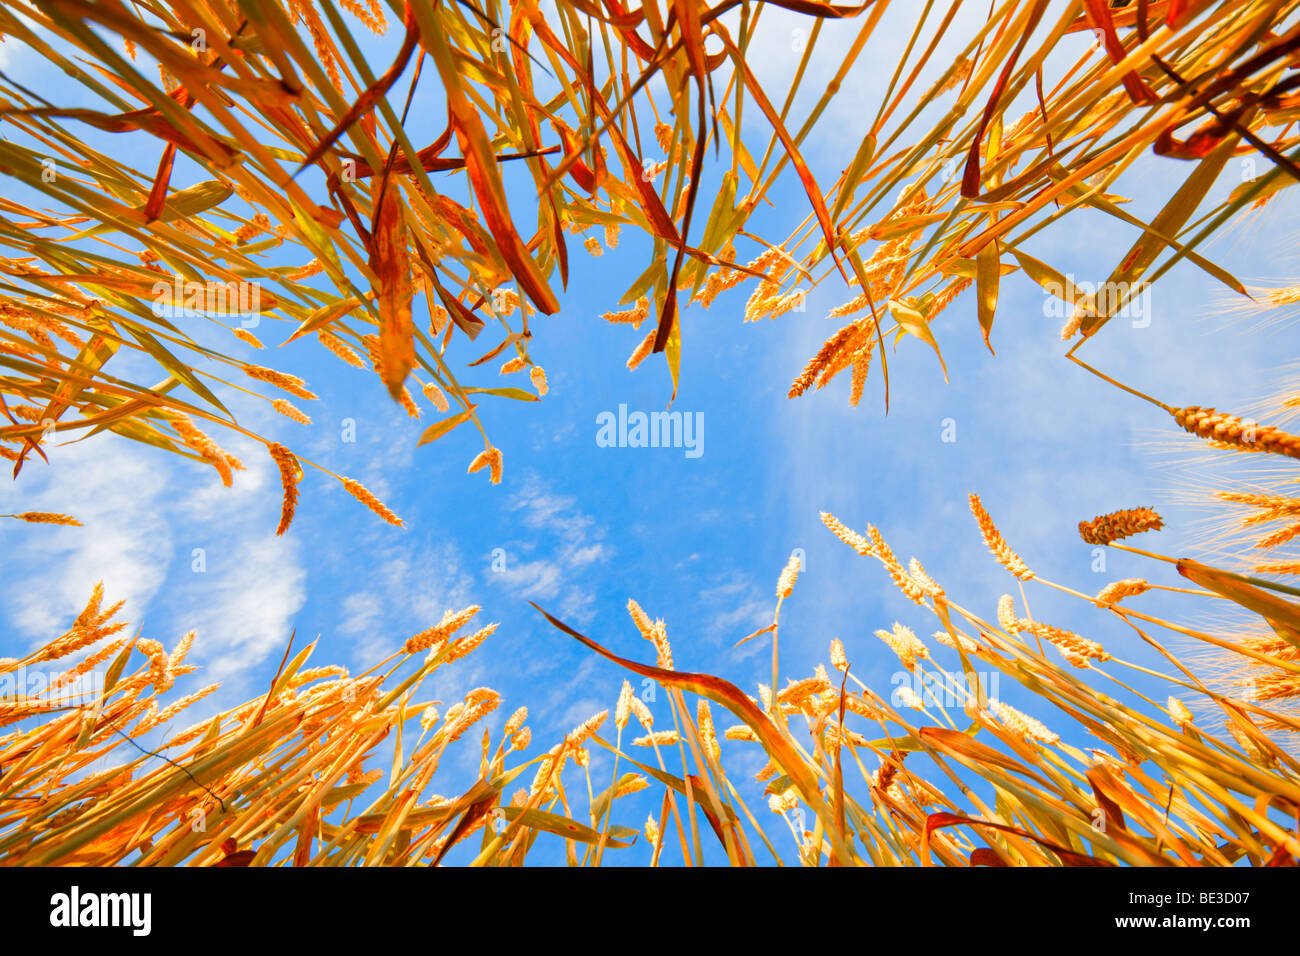 Sky framed with wheat stalks Stock Photo